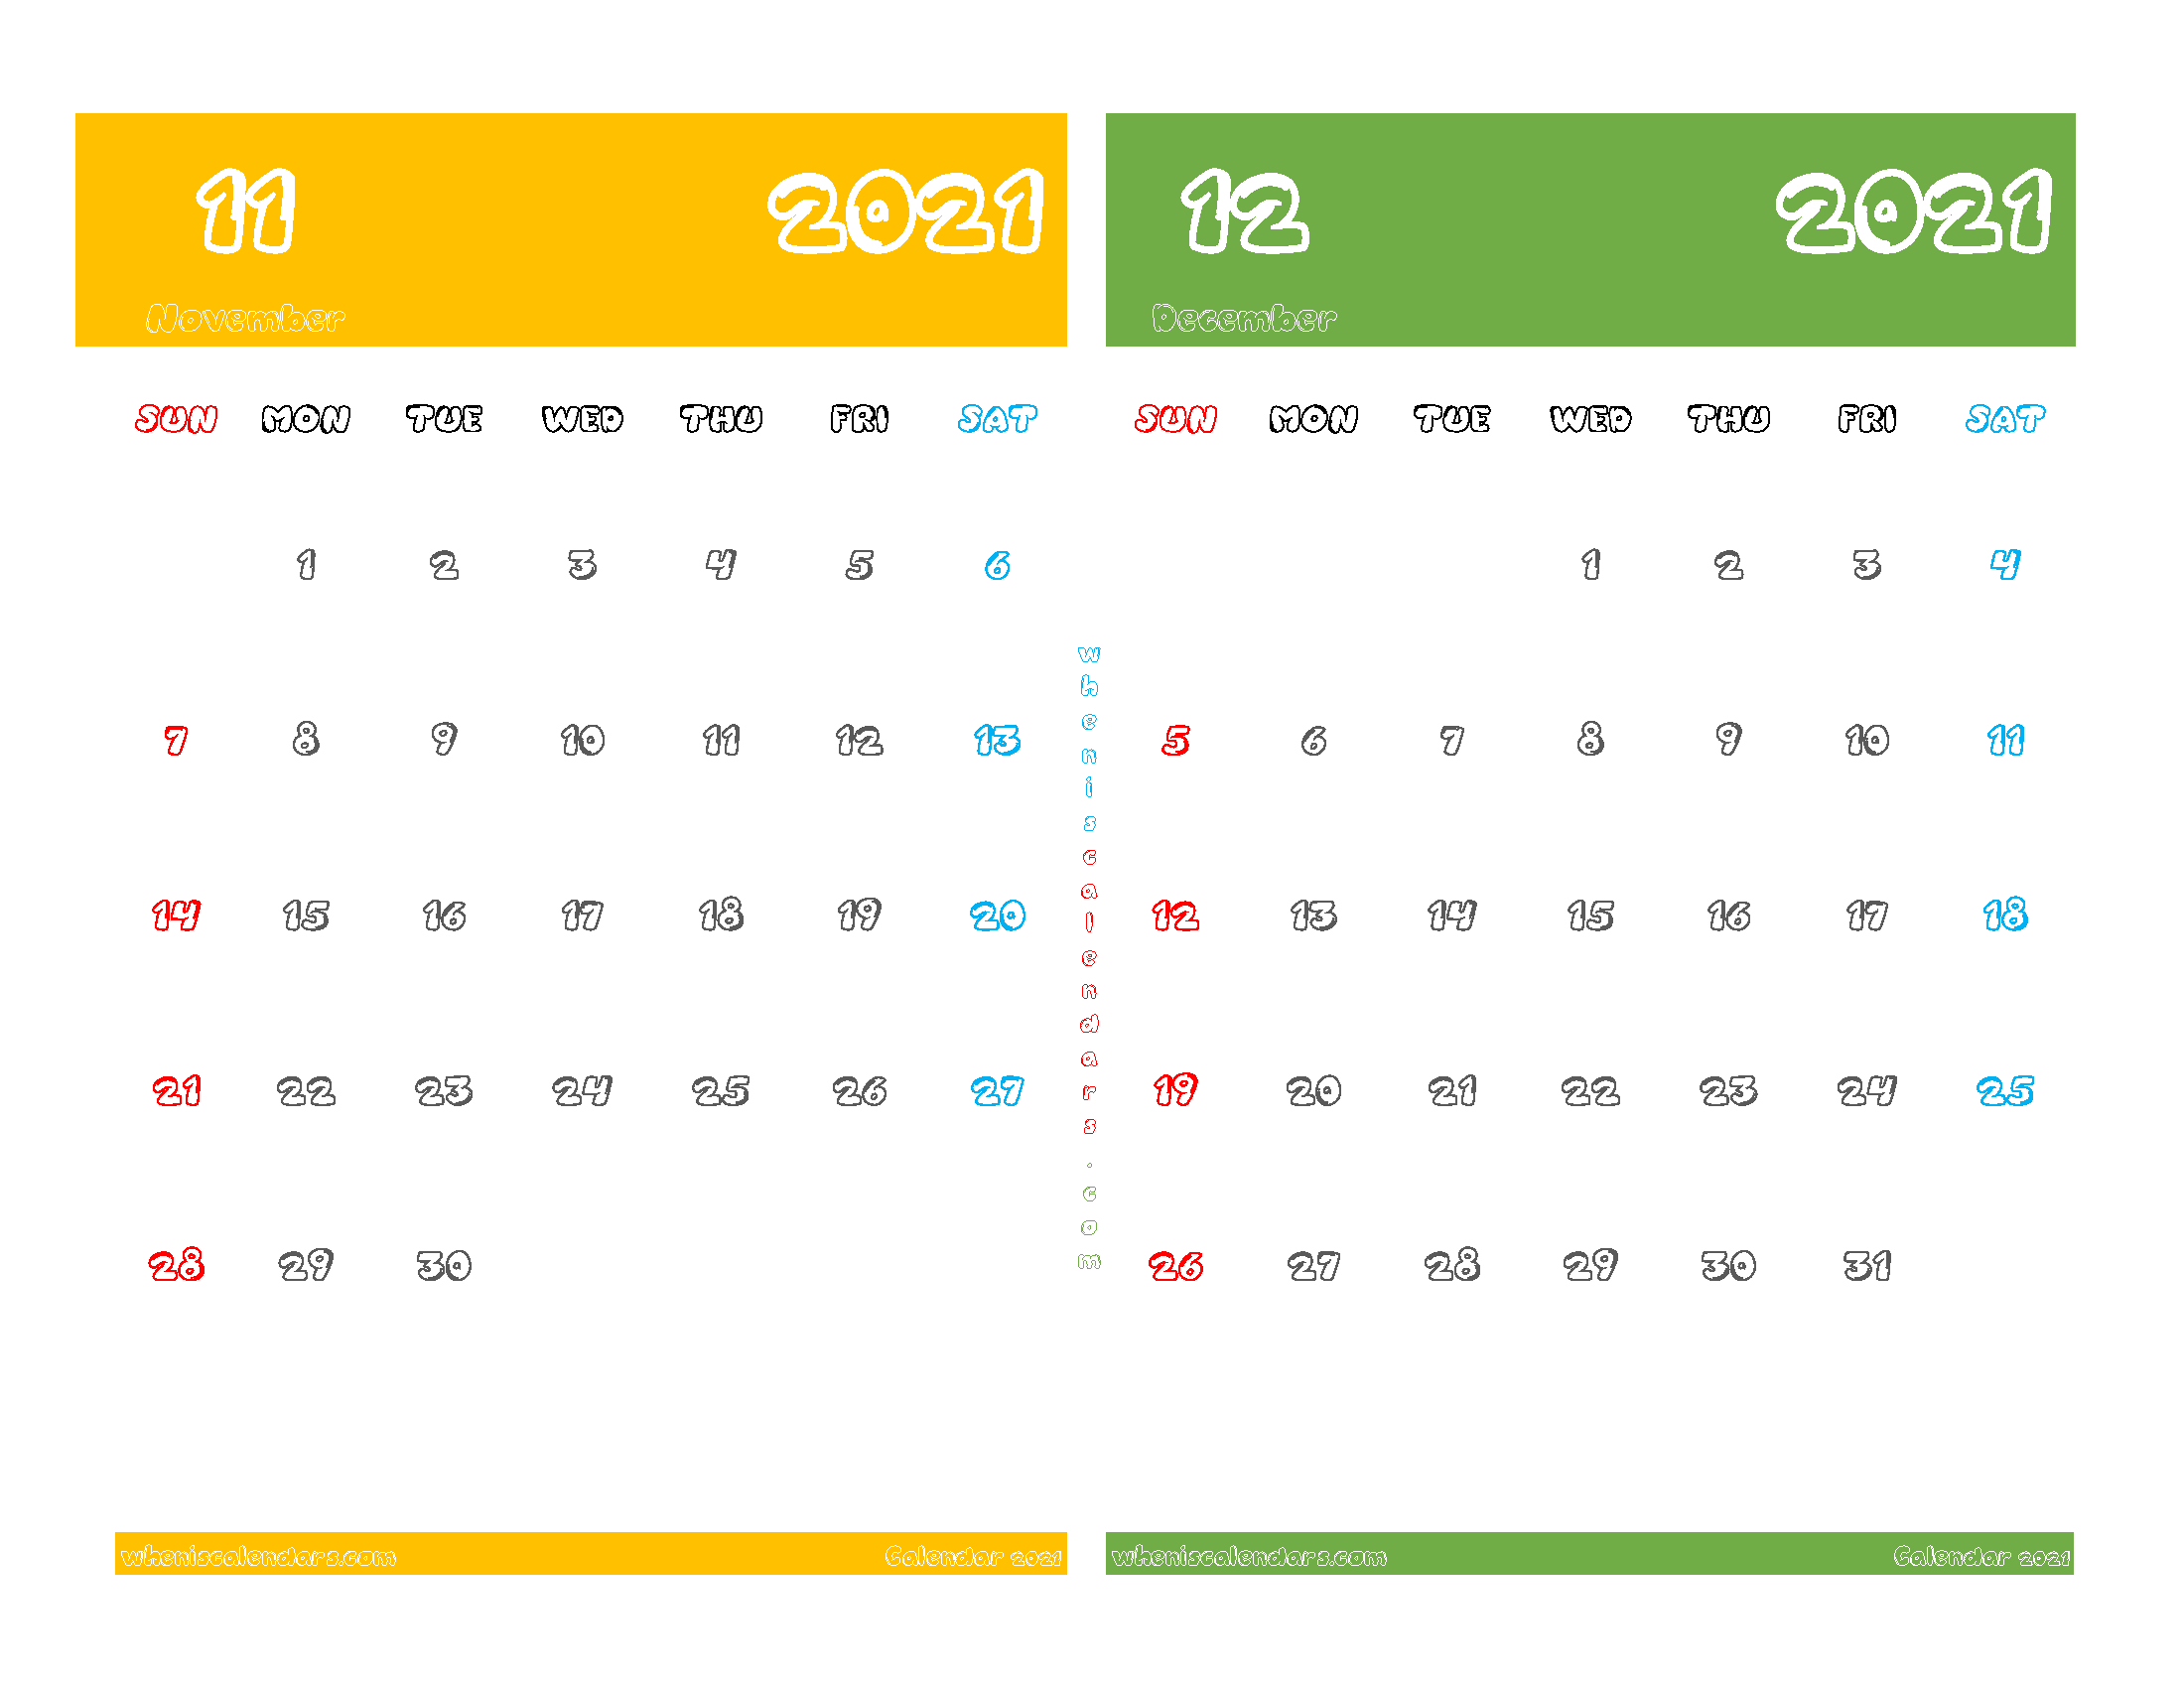 November and December 2021 Calendar Printable